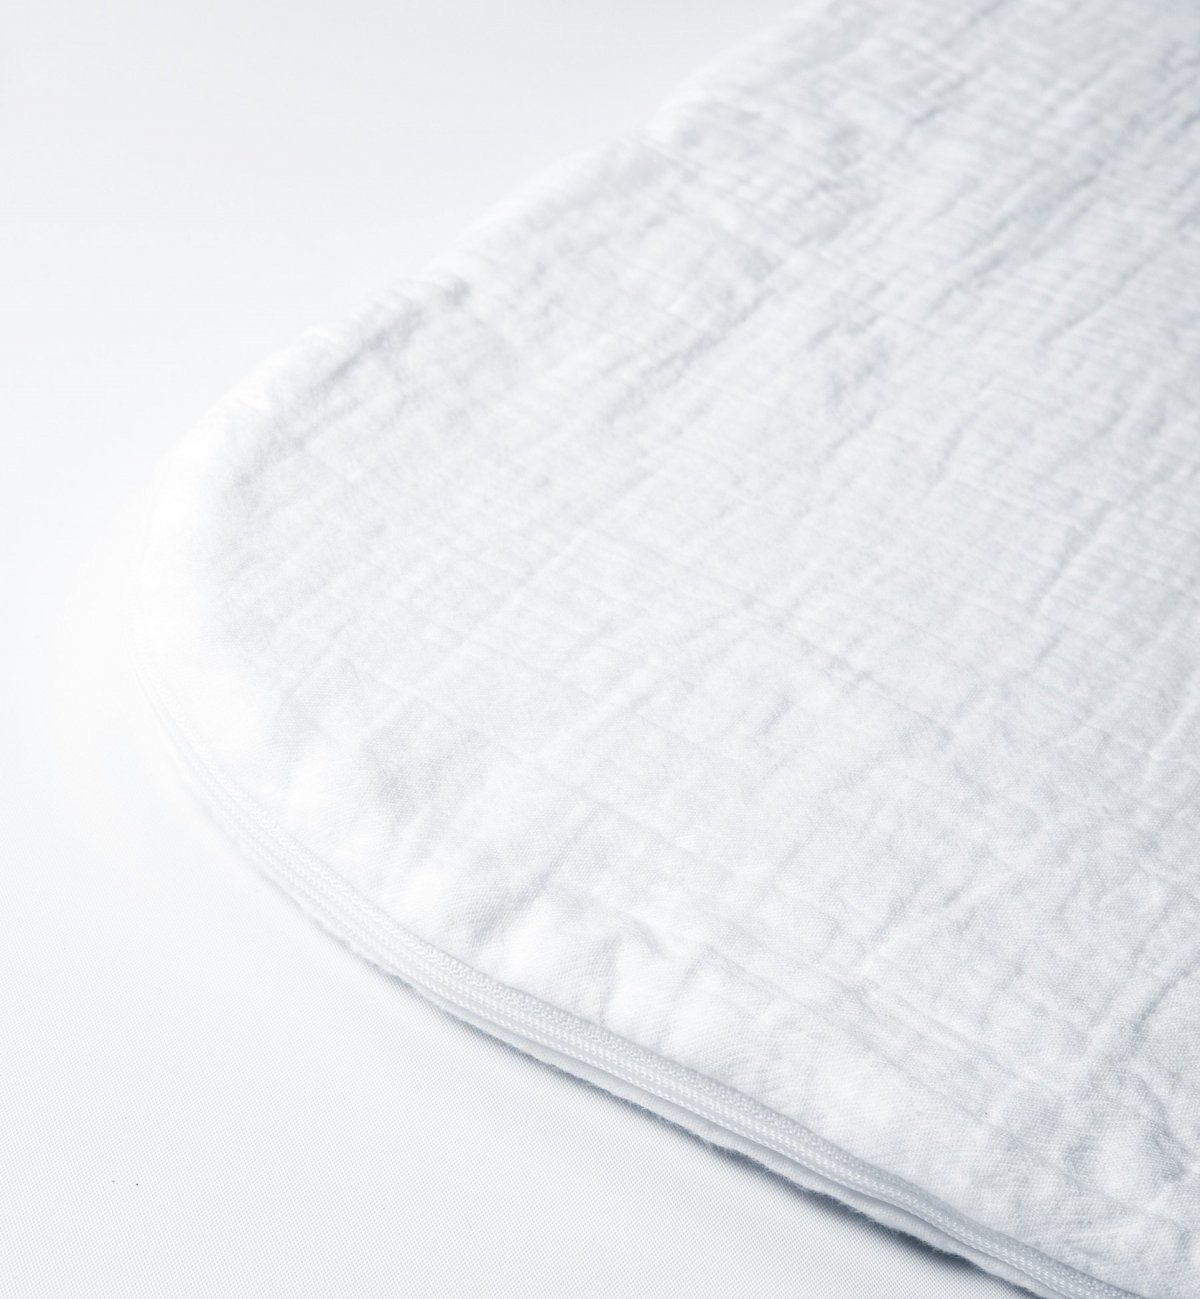 Winter sleeping bag Organic in cotton gauze - Kadolis